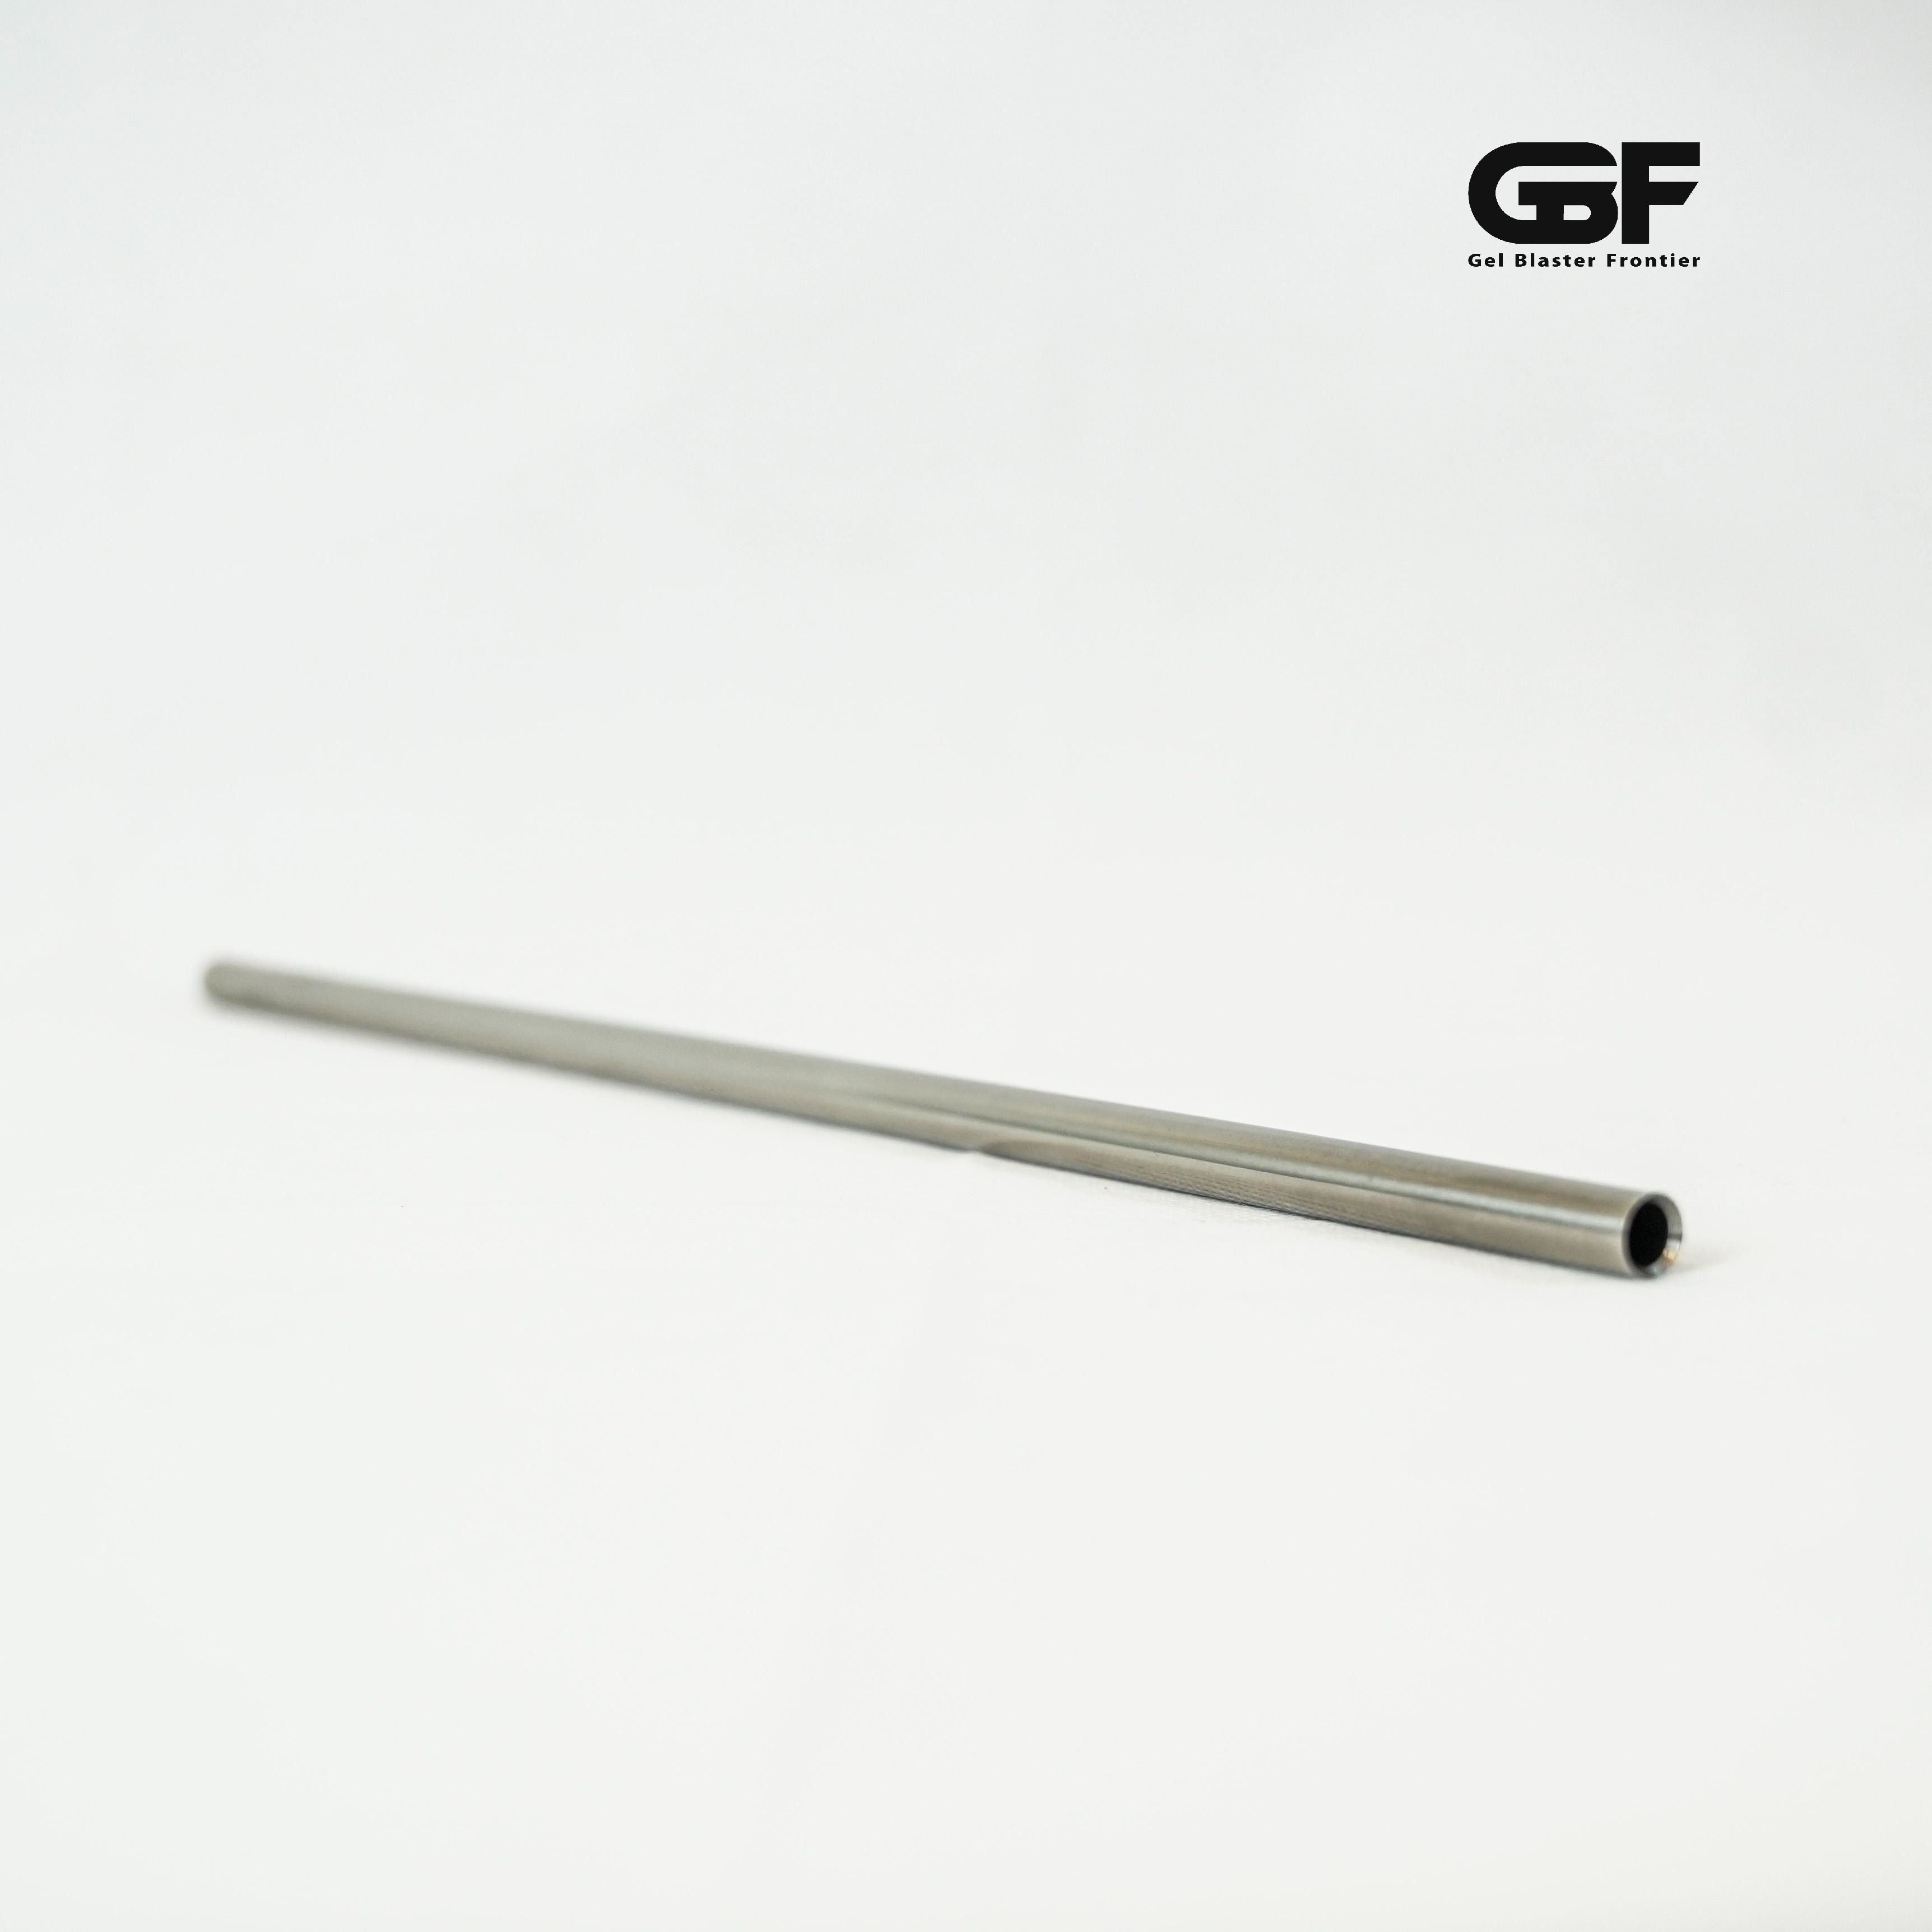 GBF Stainless Steel 7.3mm Inner Barrel 250mm/350mm - Gel Blaster Parts